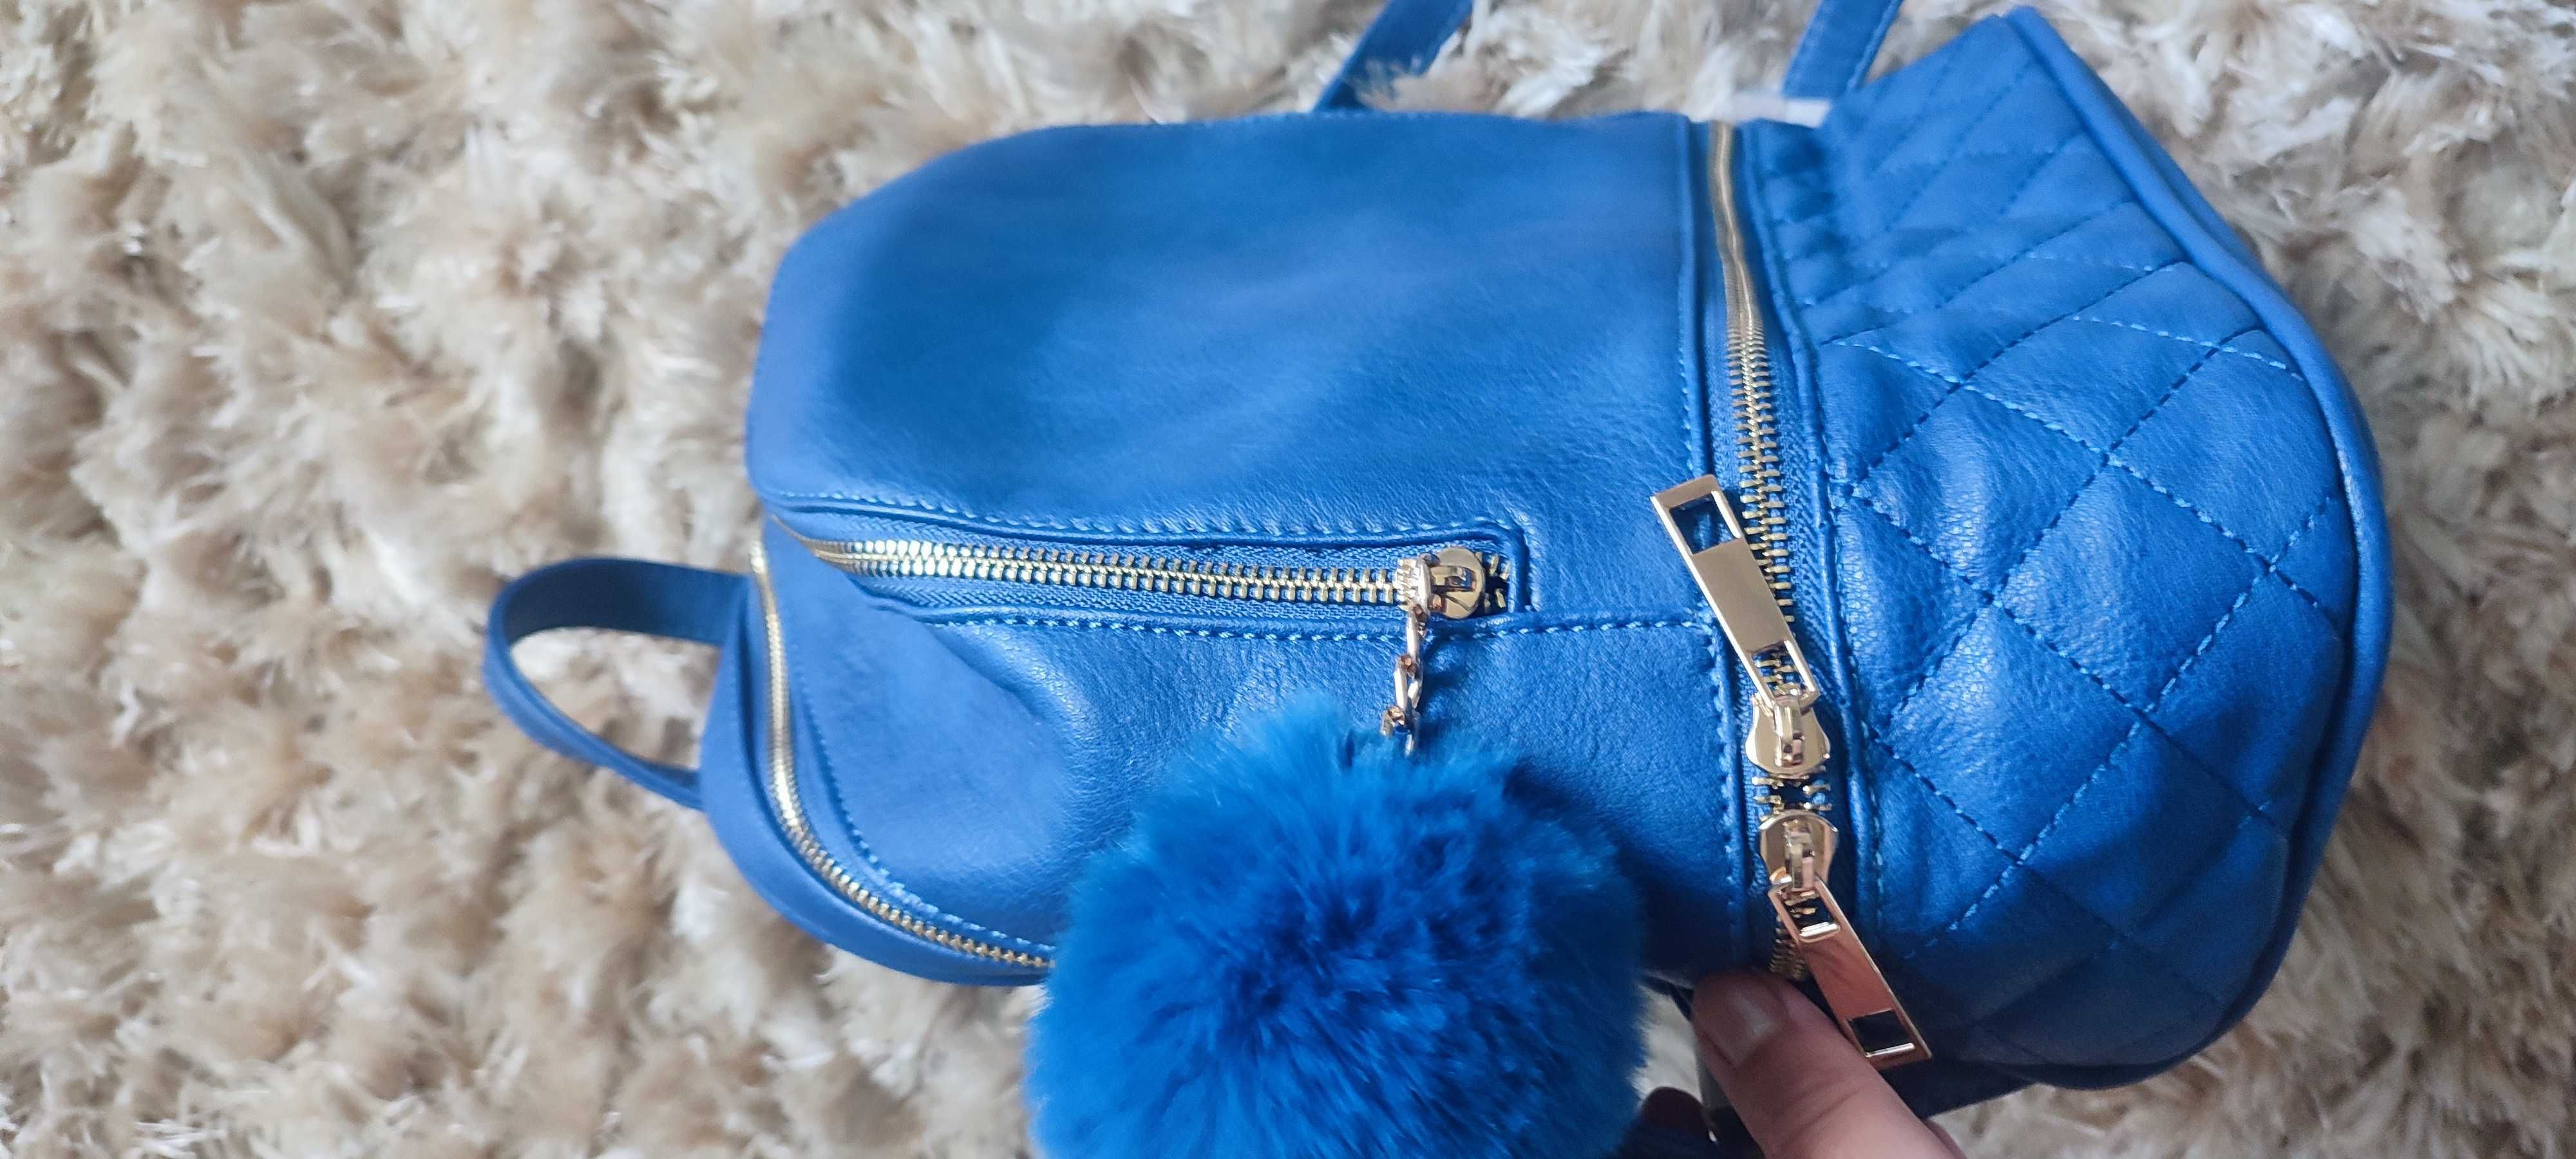 Super niebieski plecaczek